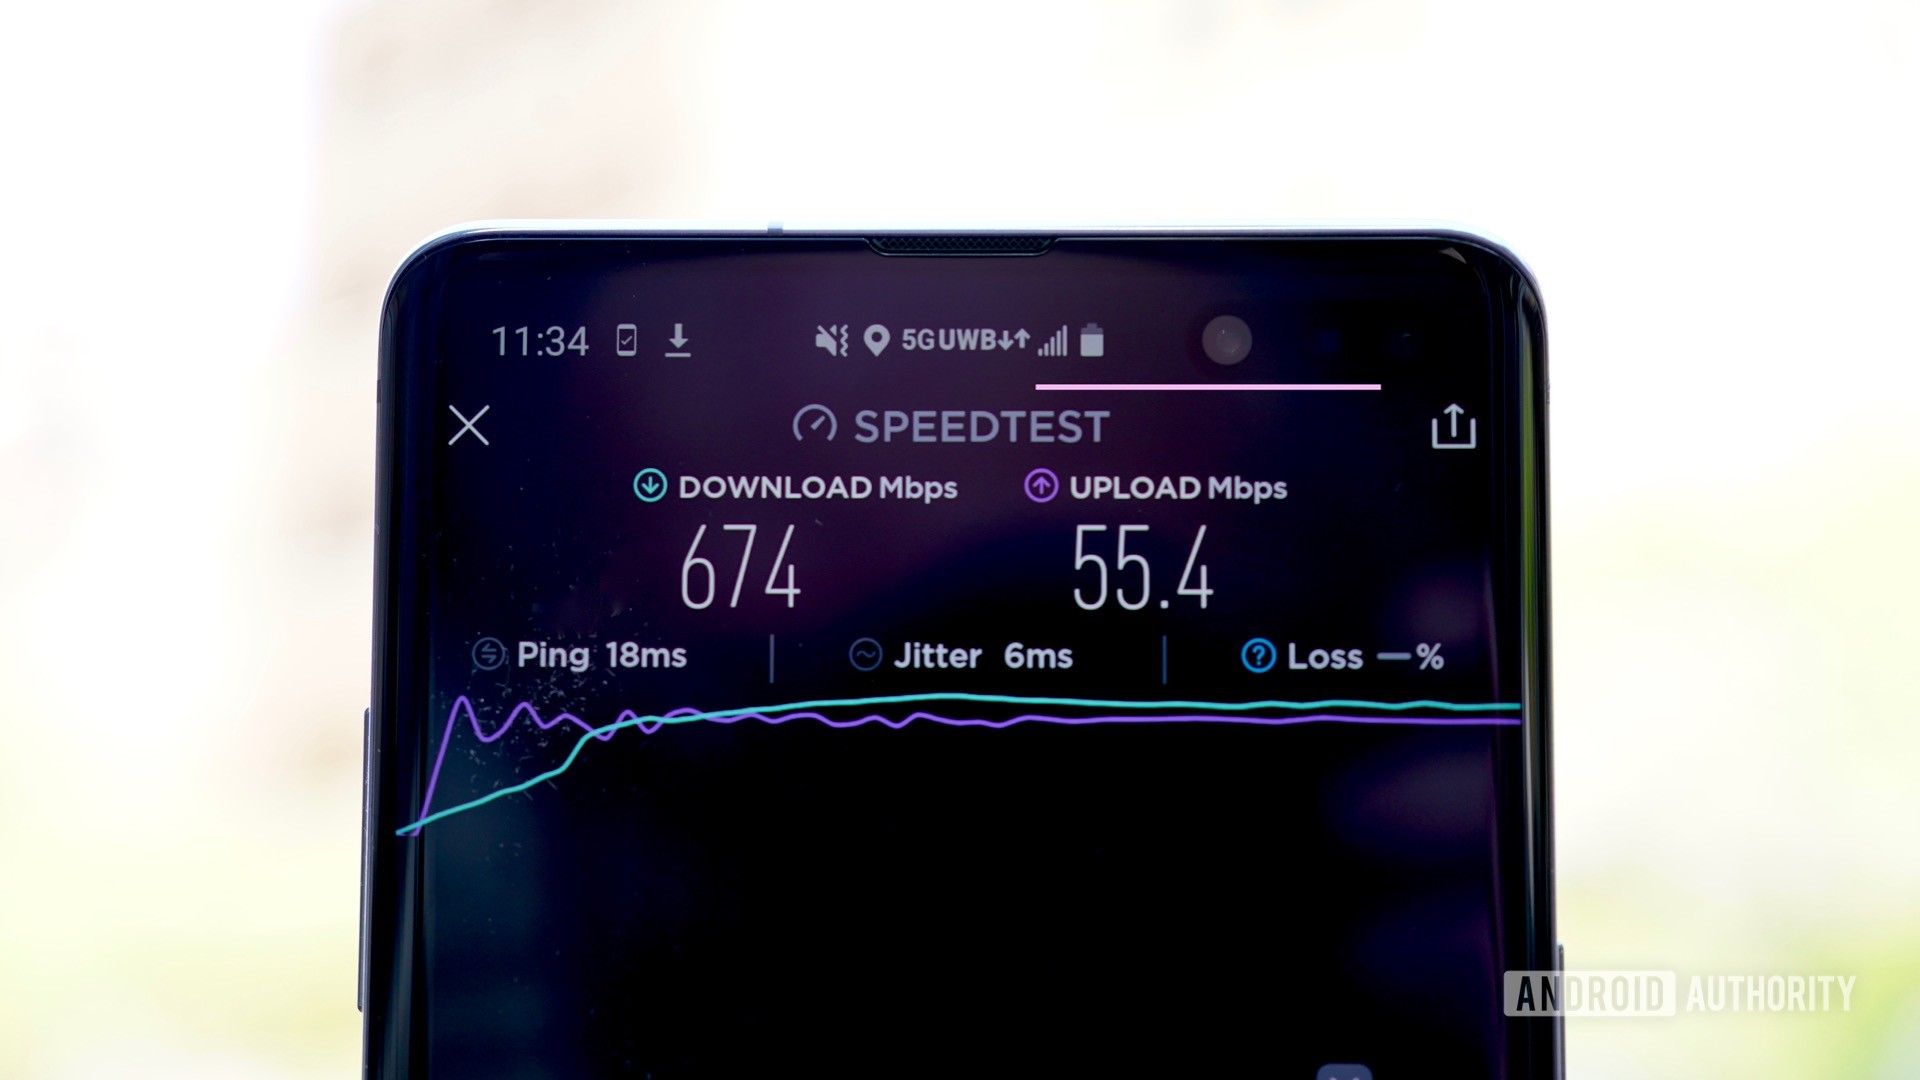 5G uk speedtest on a smartphone